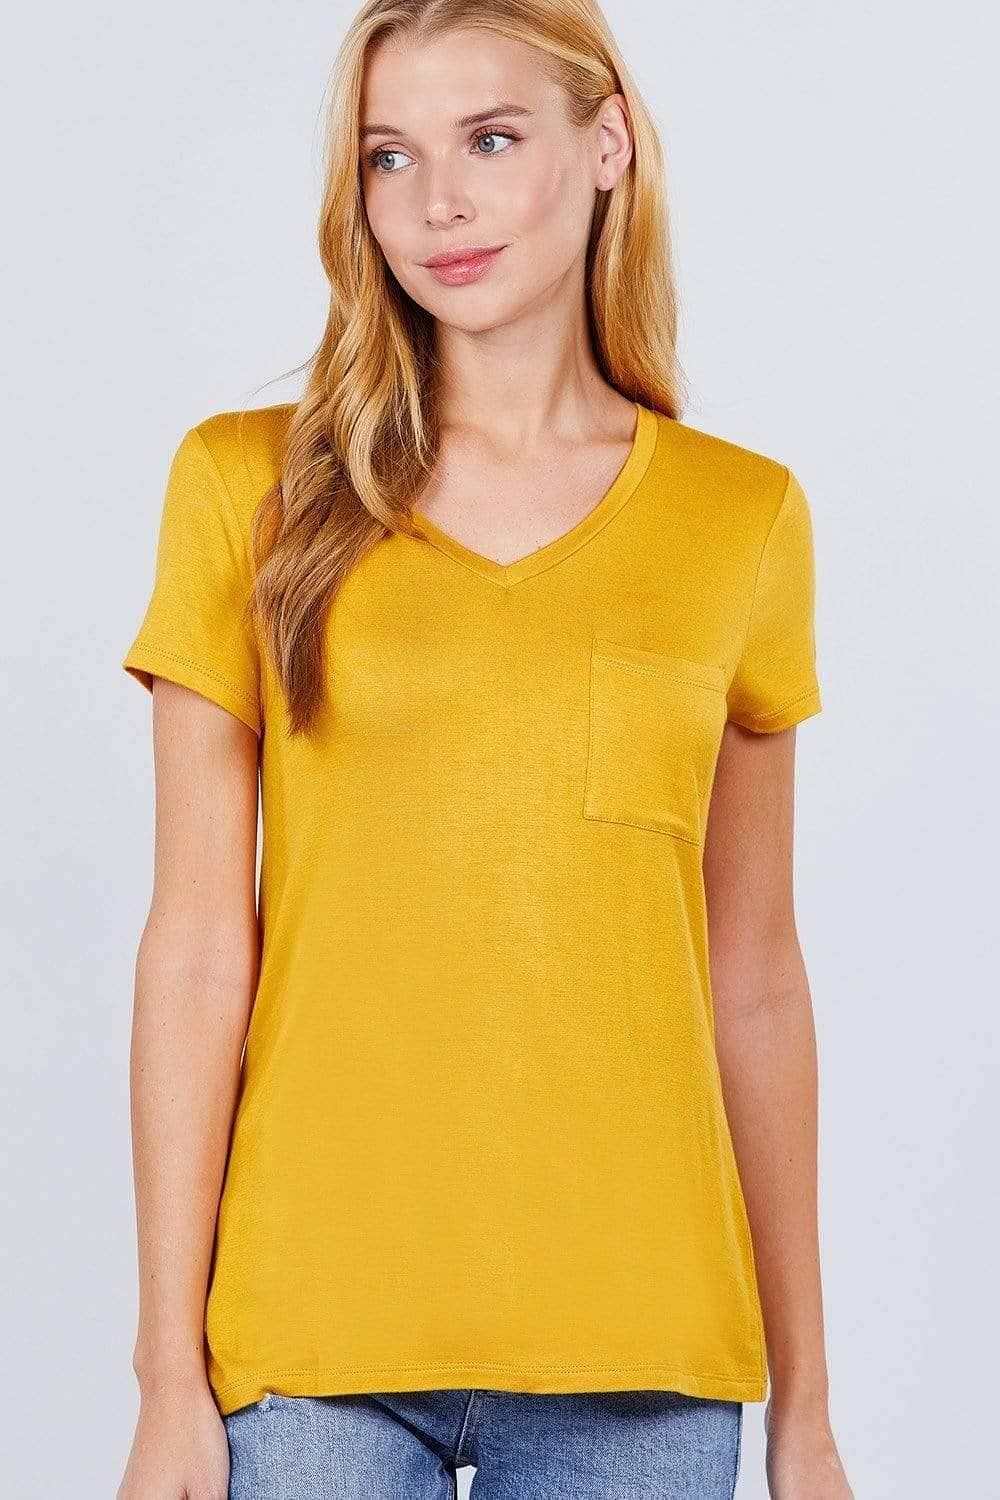 Mustard Short Sleeve V-Neck Rayon Jersey - Shopping Therapy, LLC Tops